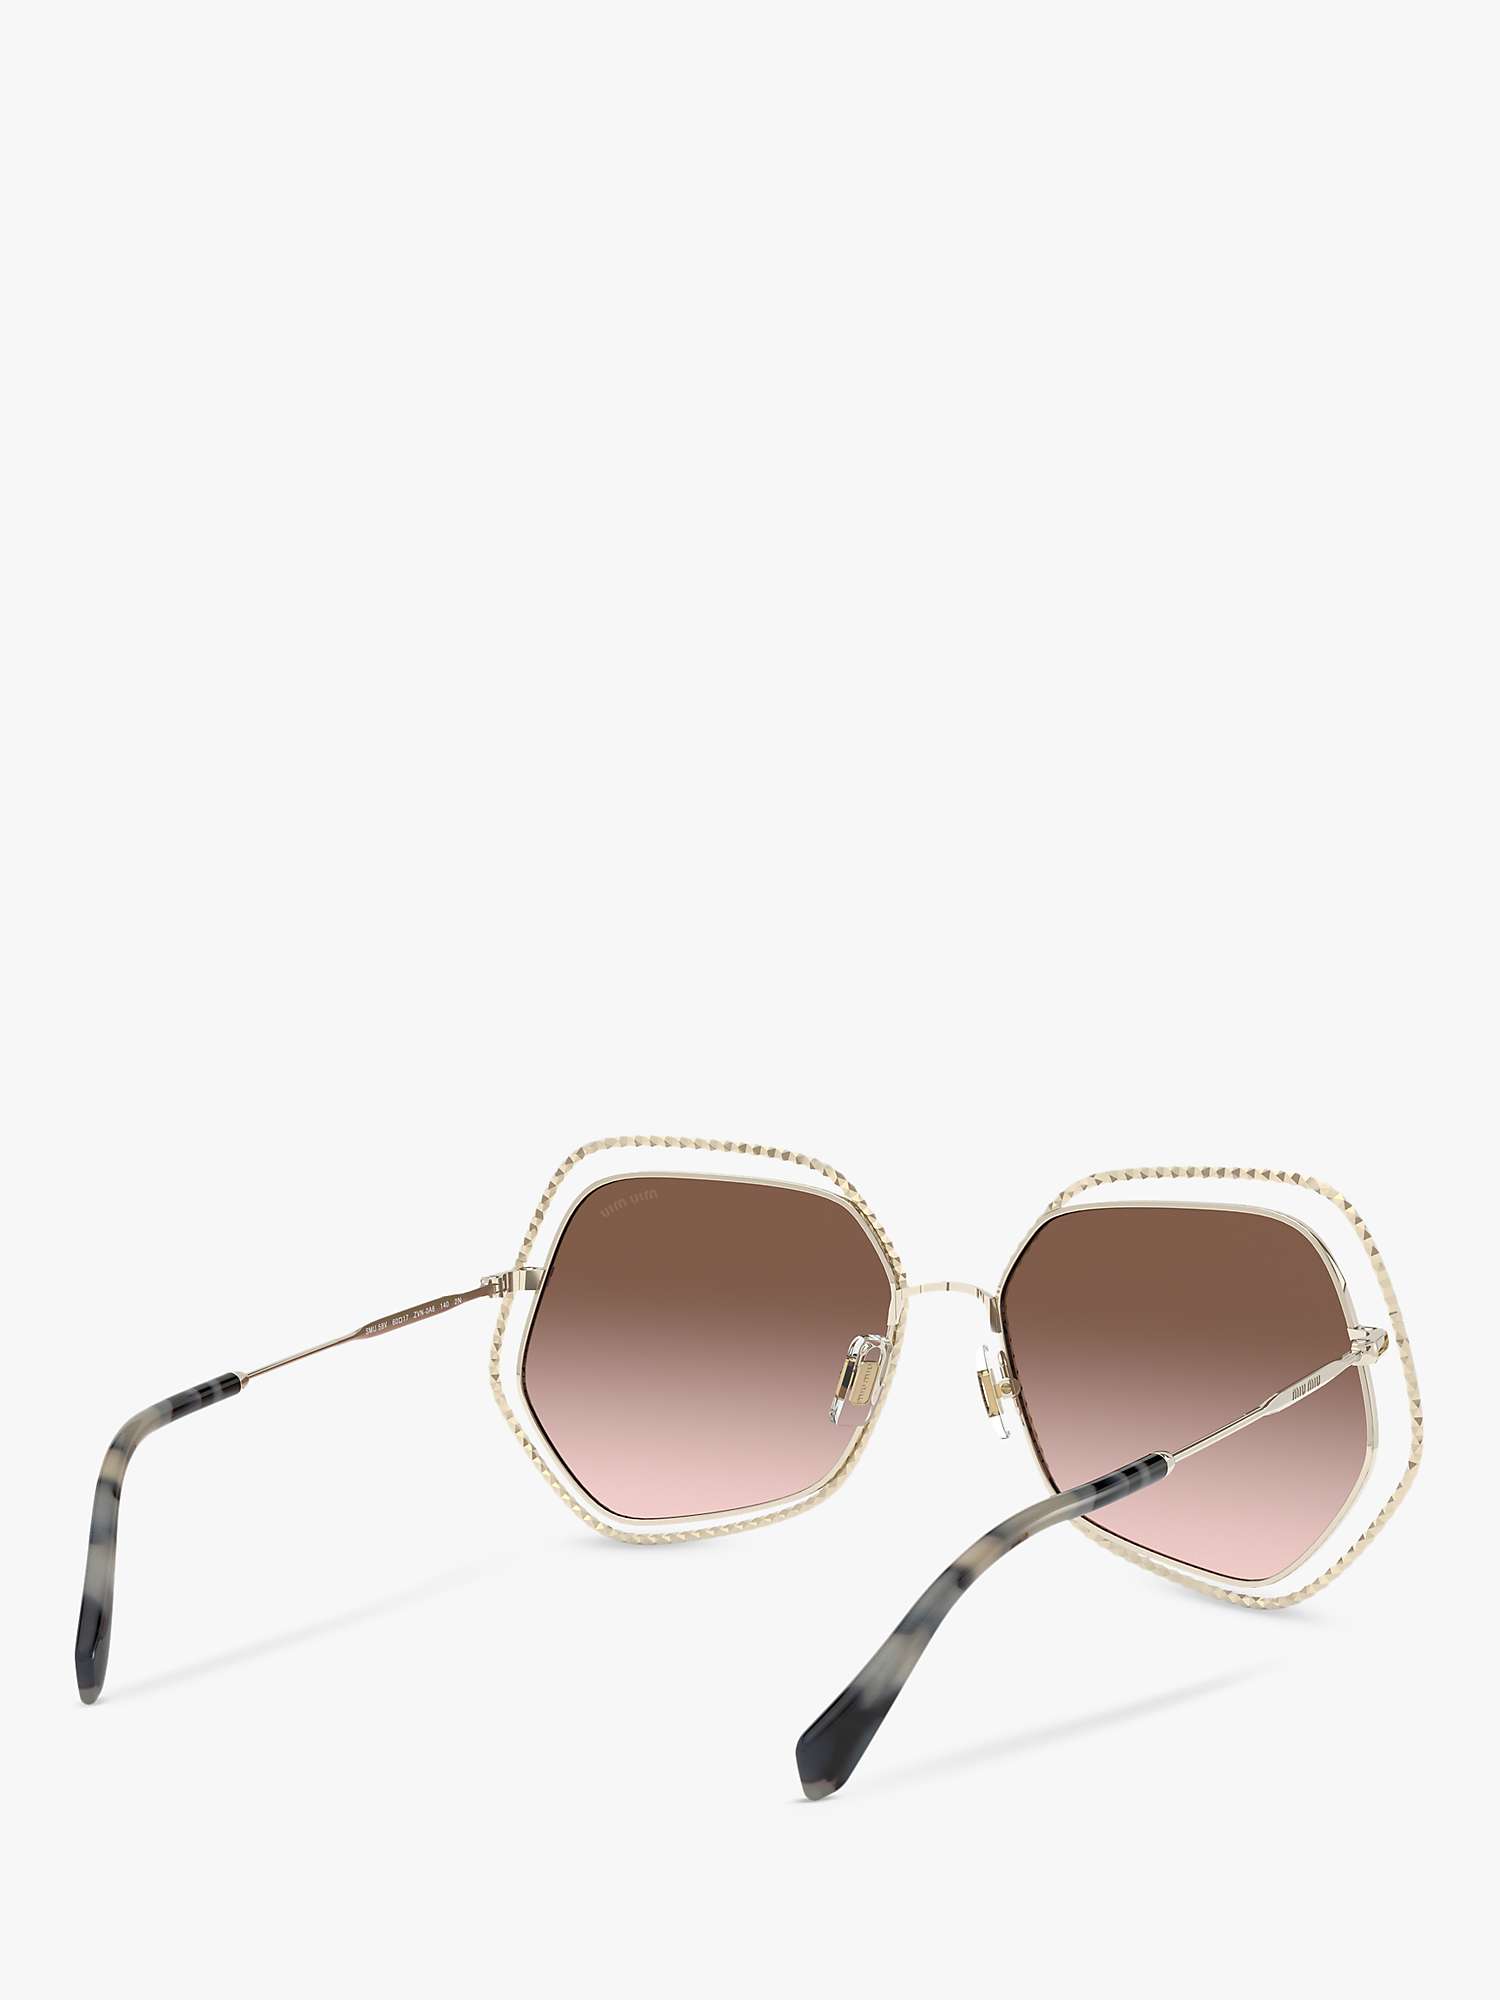 Buy Miu Miu MU 58VS Women's Irregular Sunglasses Online at johnlewis.com